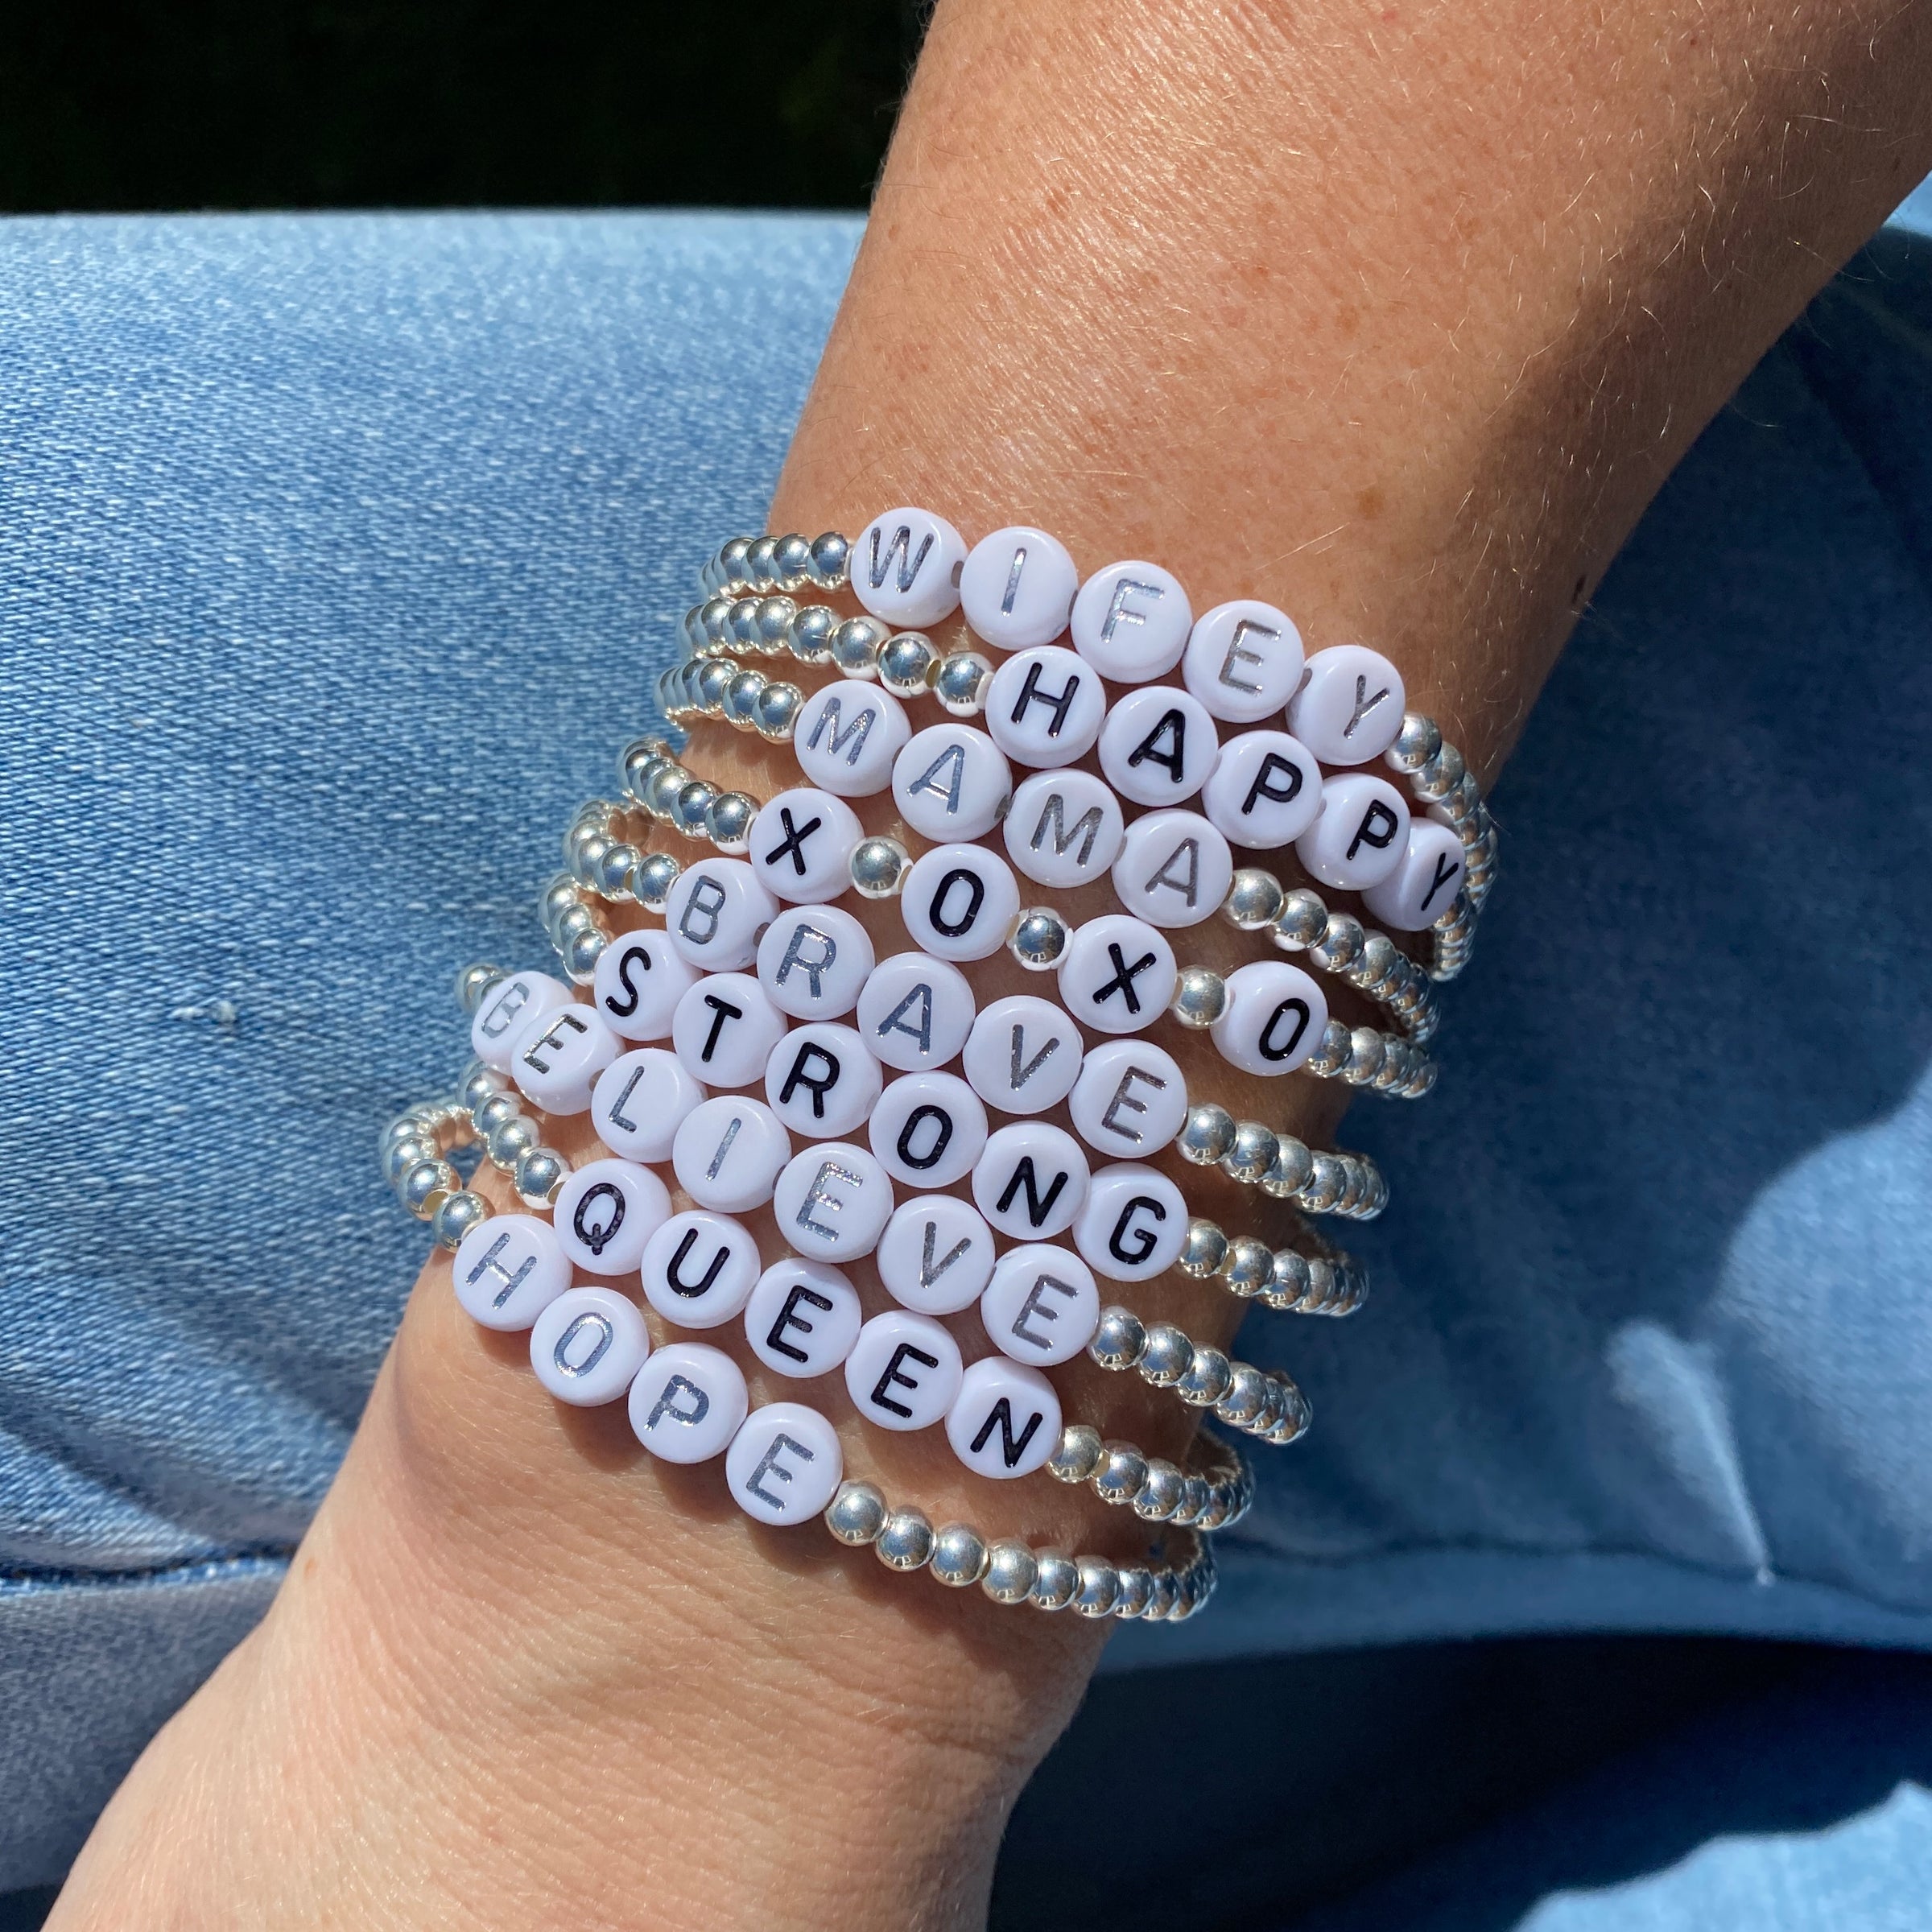 Share 79+ custom word bracelet latest - in.duhocakina